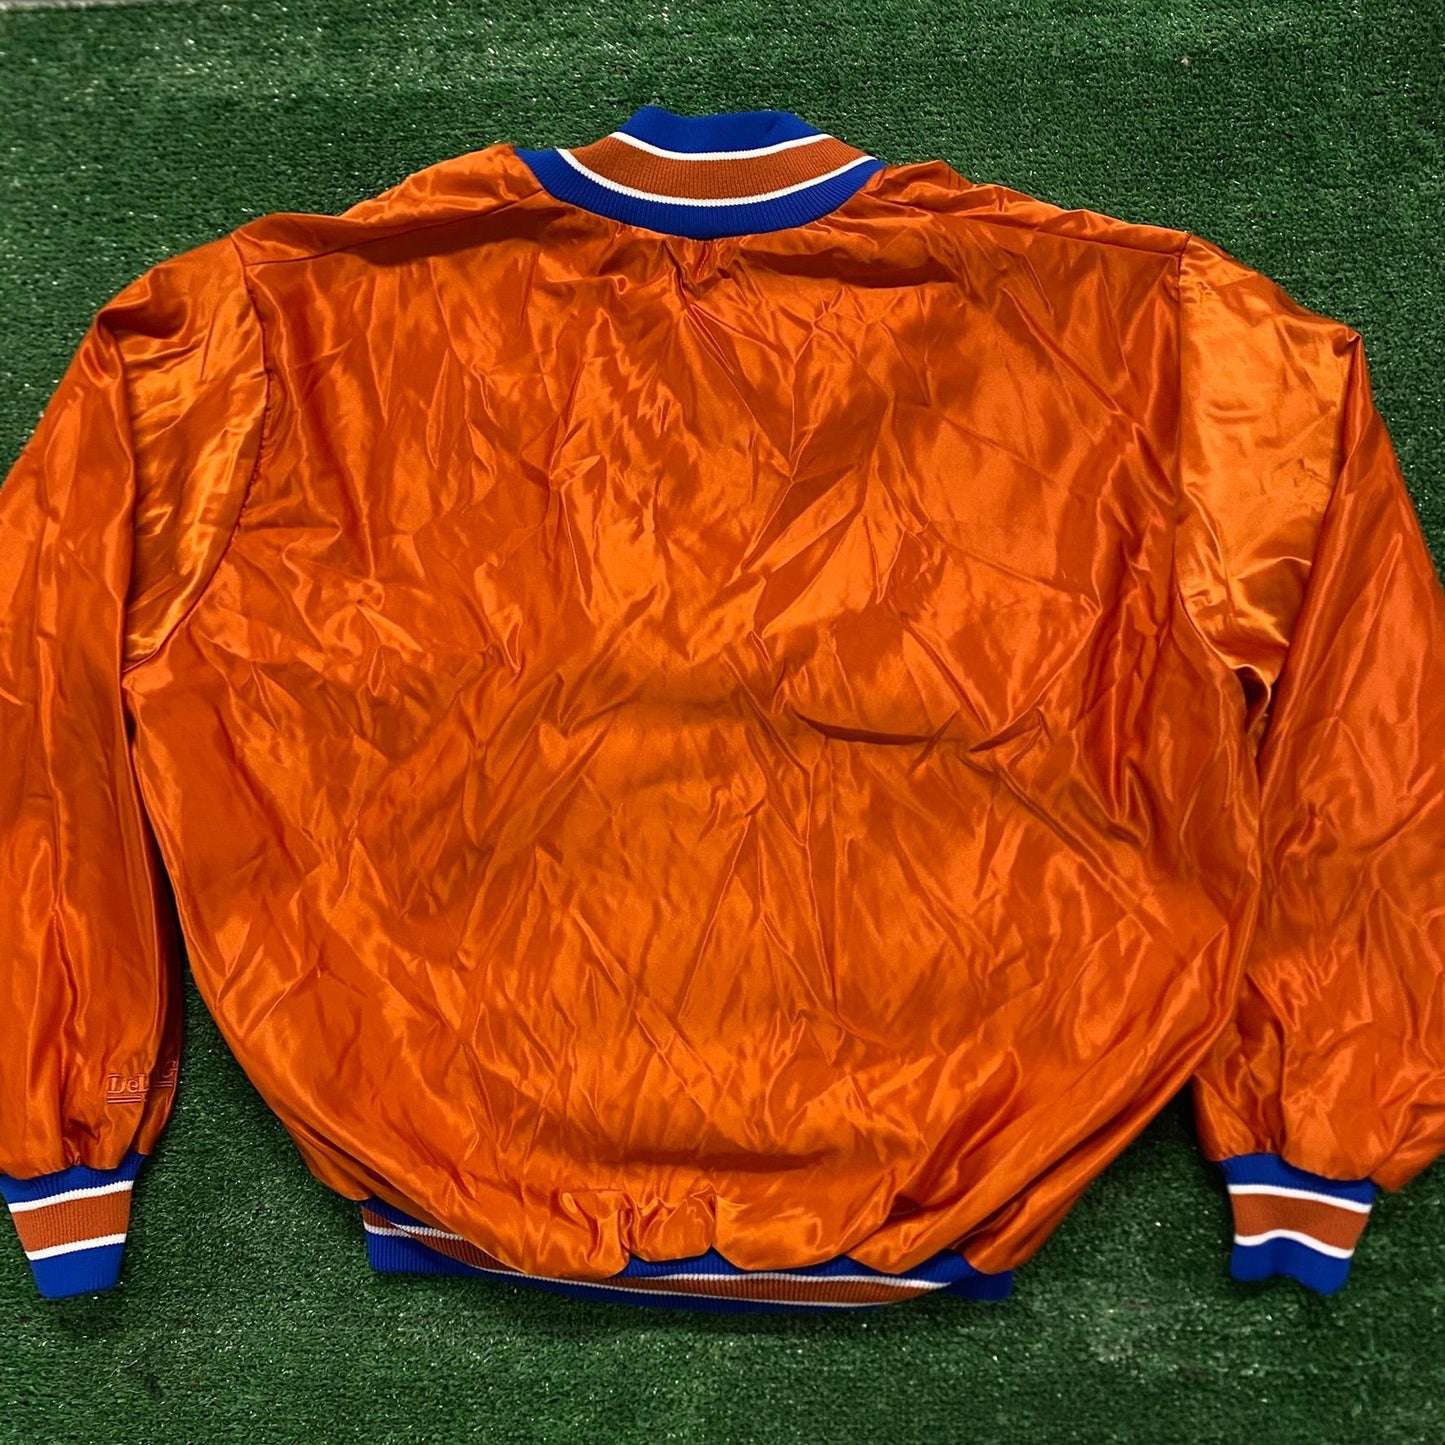 Vintage 90s Longhorn Athletics Sports Satin Bomber Jacket